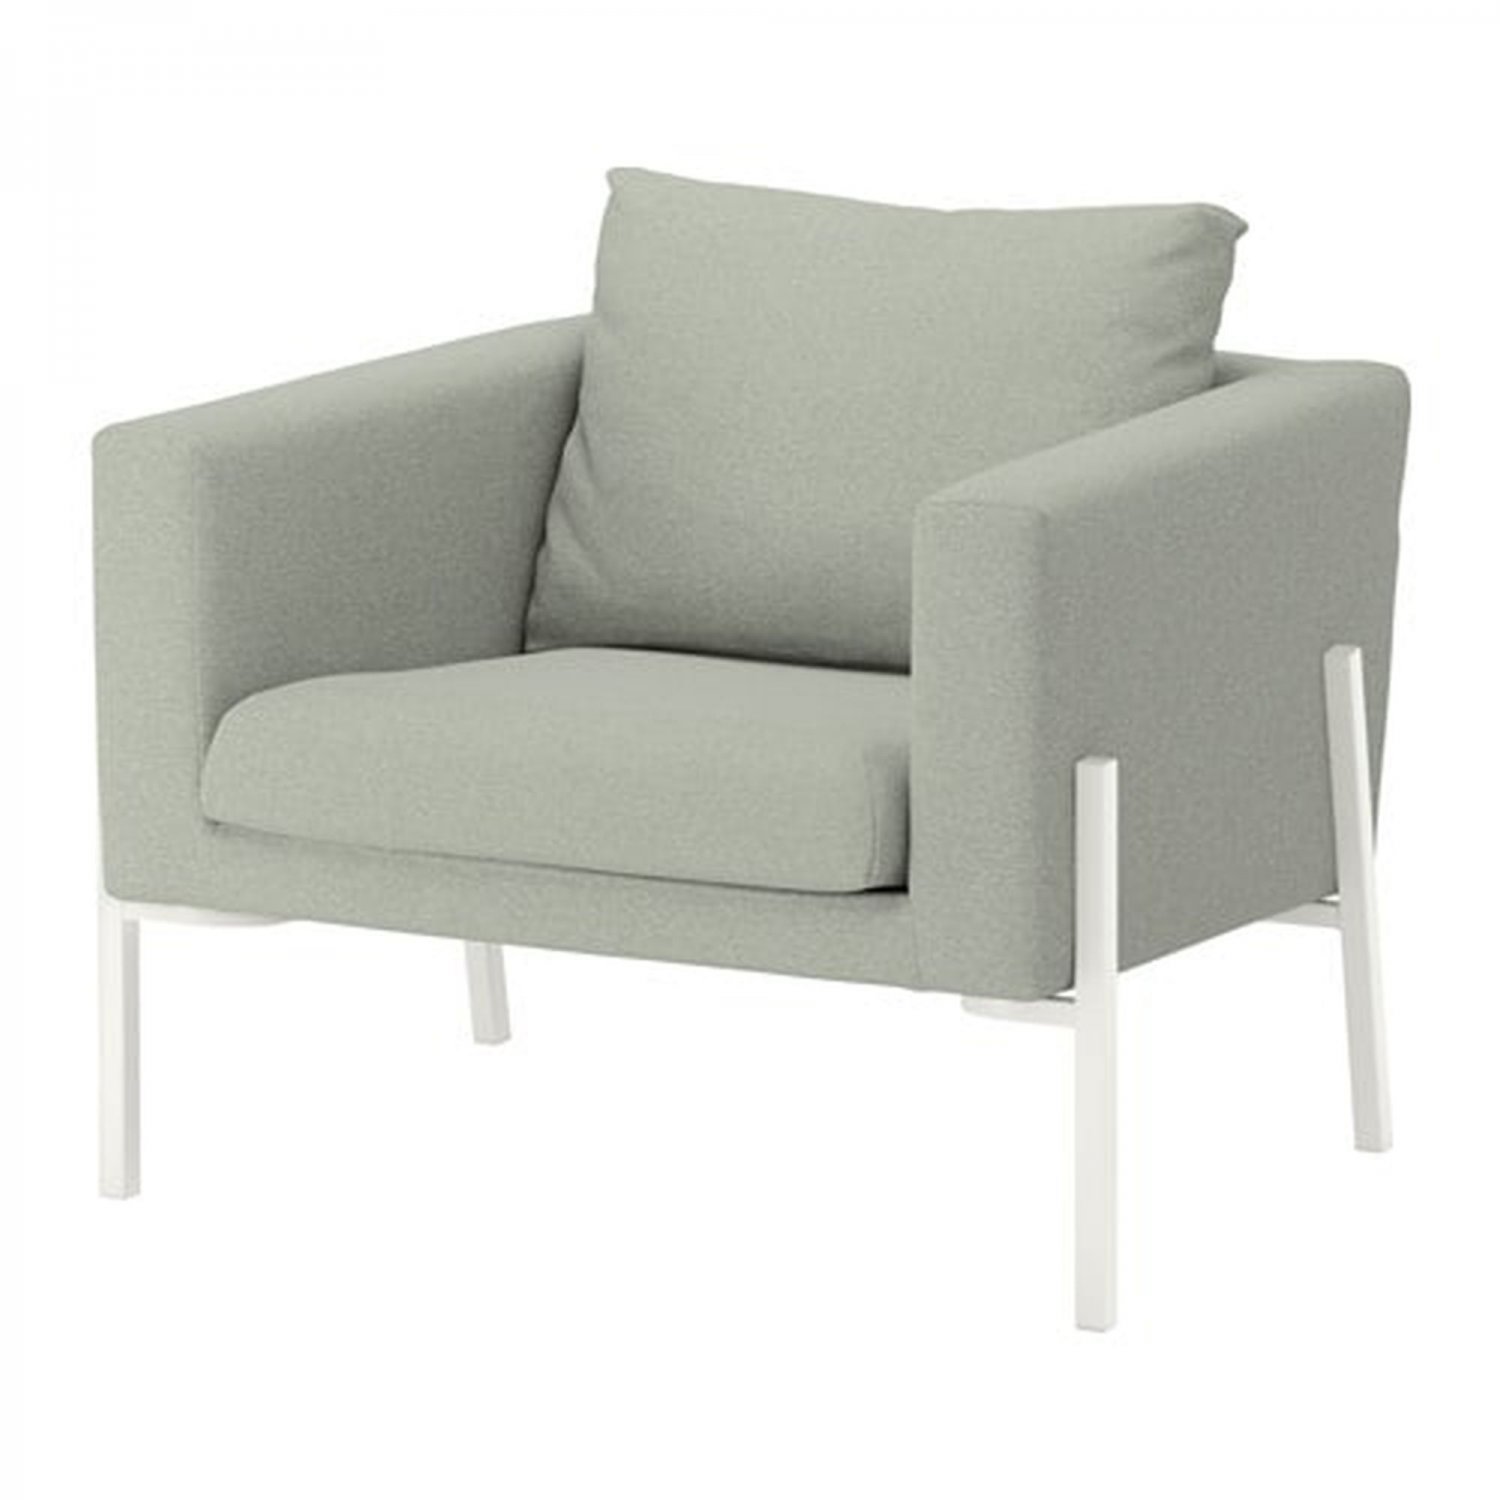 IKEA Koarp Armchair SLIPCOVER Chair Cover GUNNARED Light Green